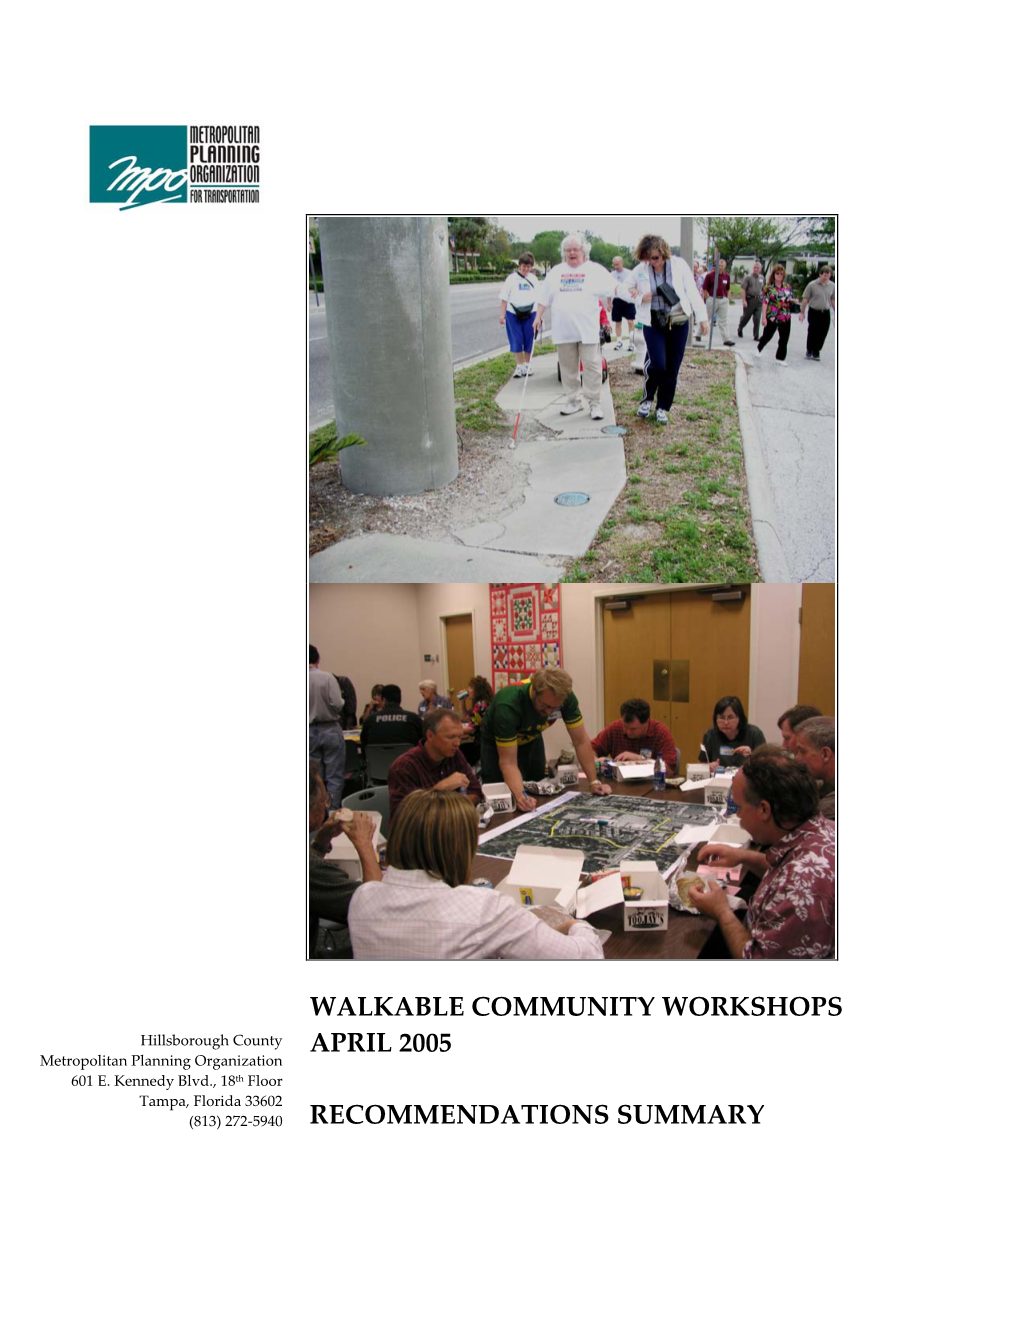 Walkable Community Workshops Summary